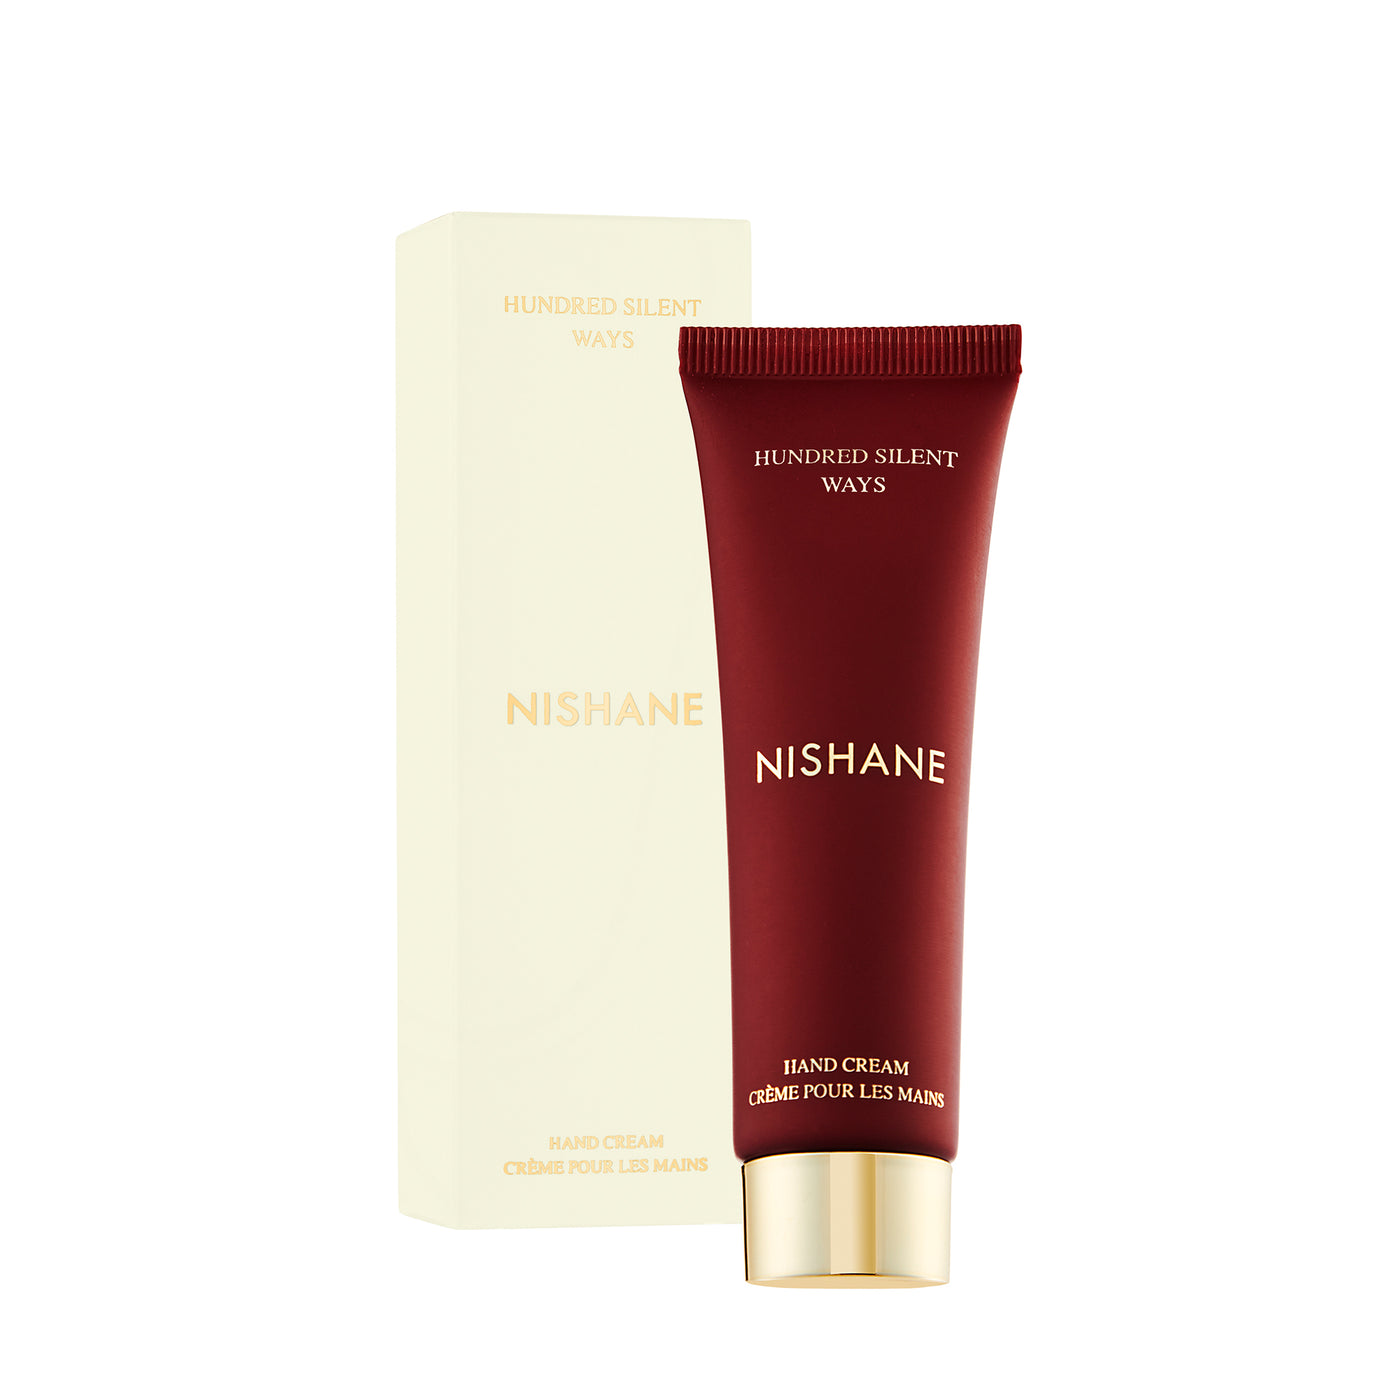 Nishane 100 Silent Ways Hand Cream 30ml